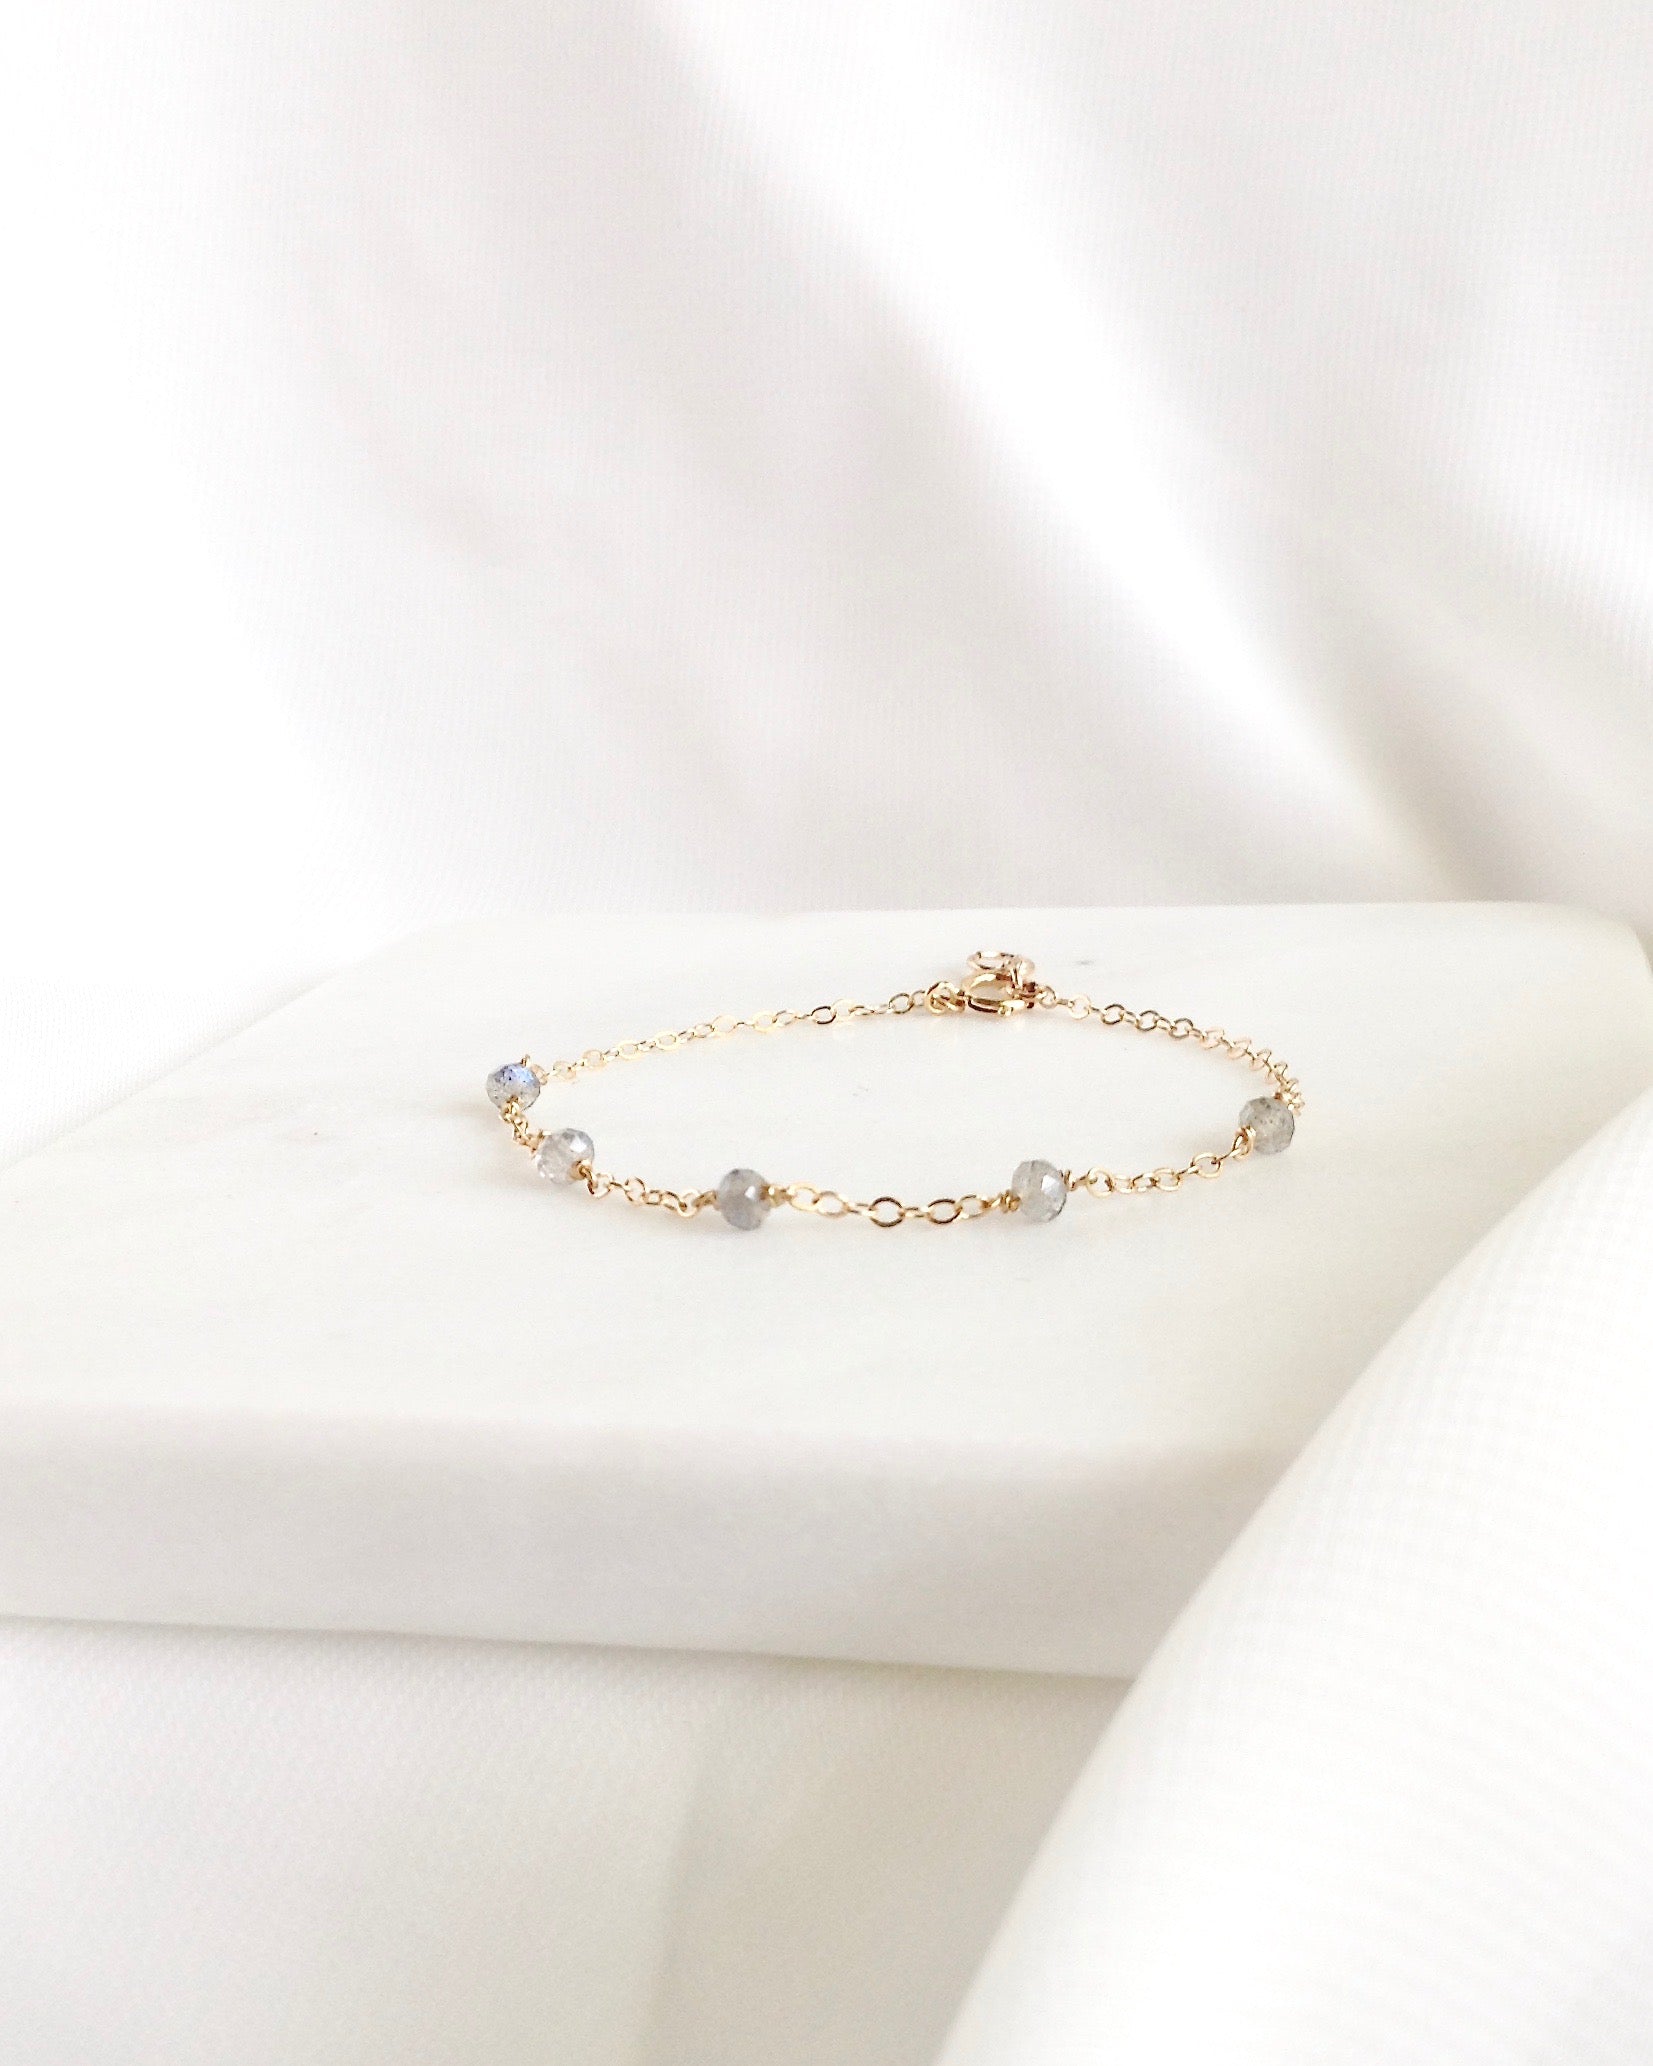 Labradorite Dainty Everyday Bracelet | Simple Delicate Chain Bracelet | IB Jewelry